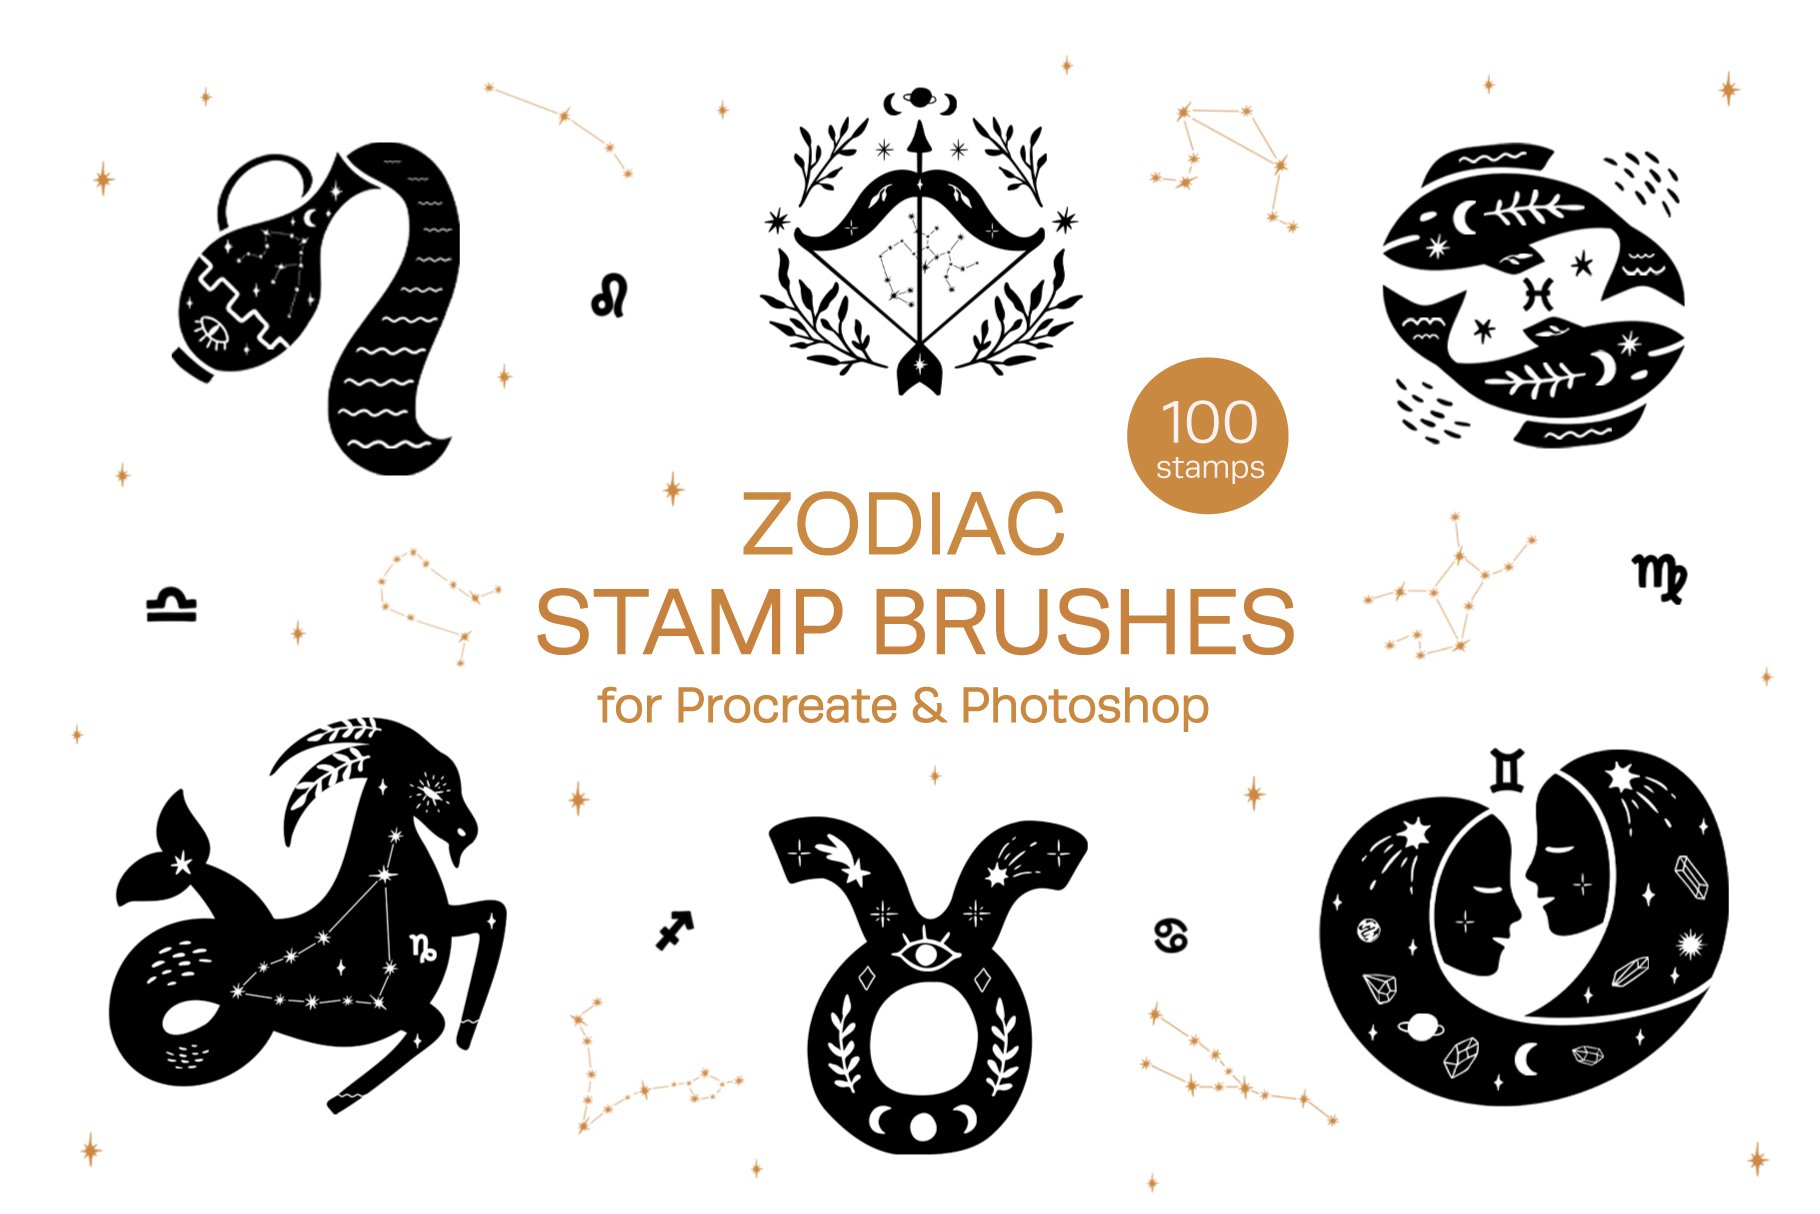 Zodiac Stamp Brushes for Procreatecover image.